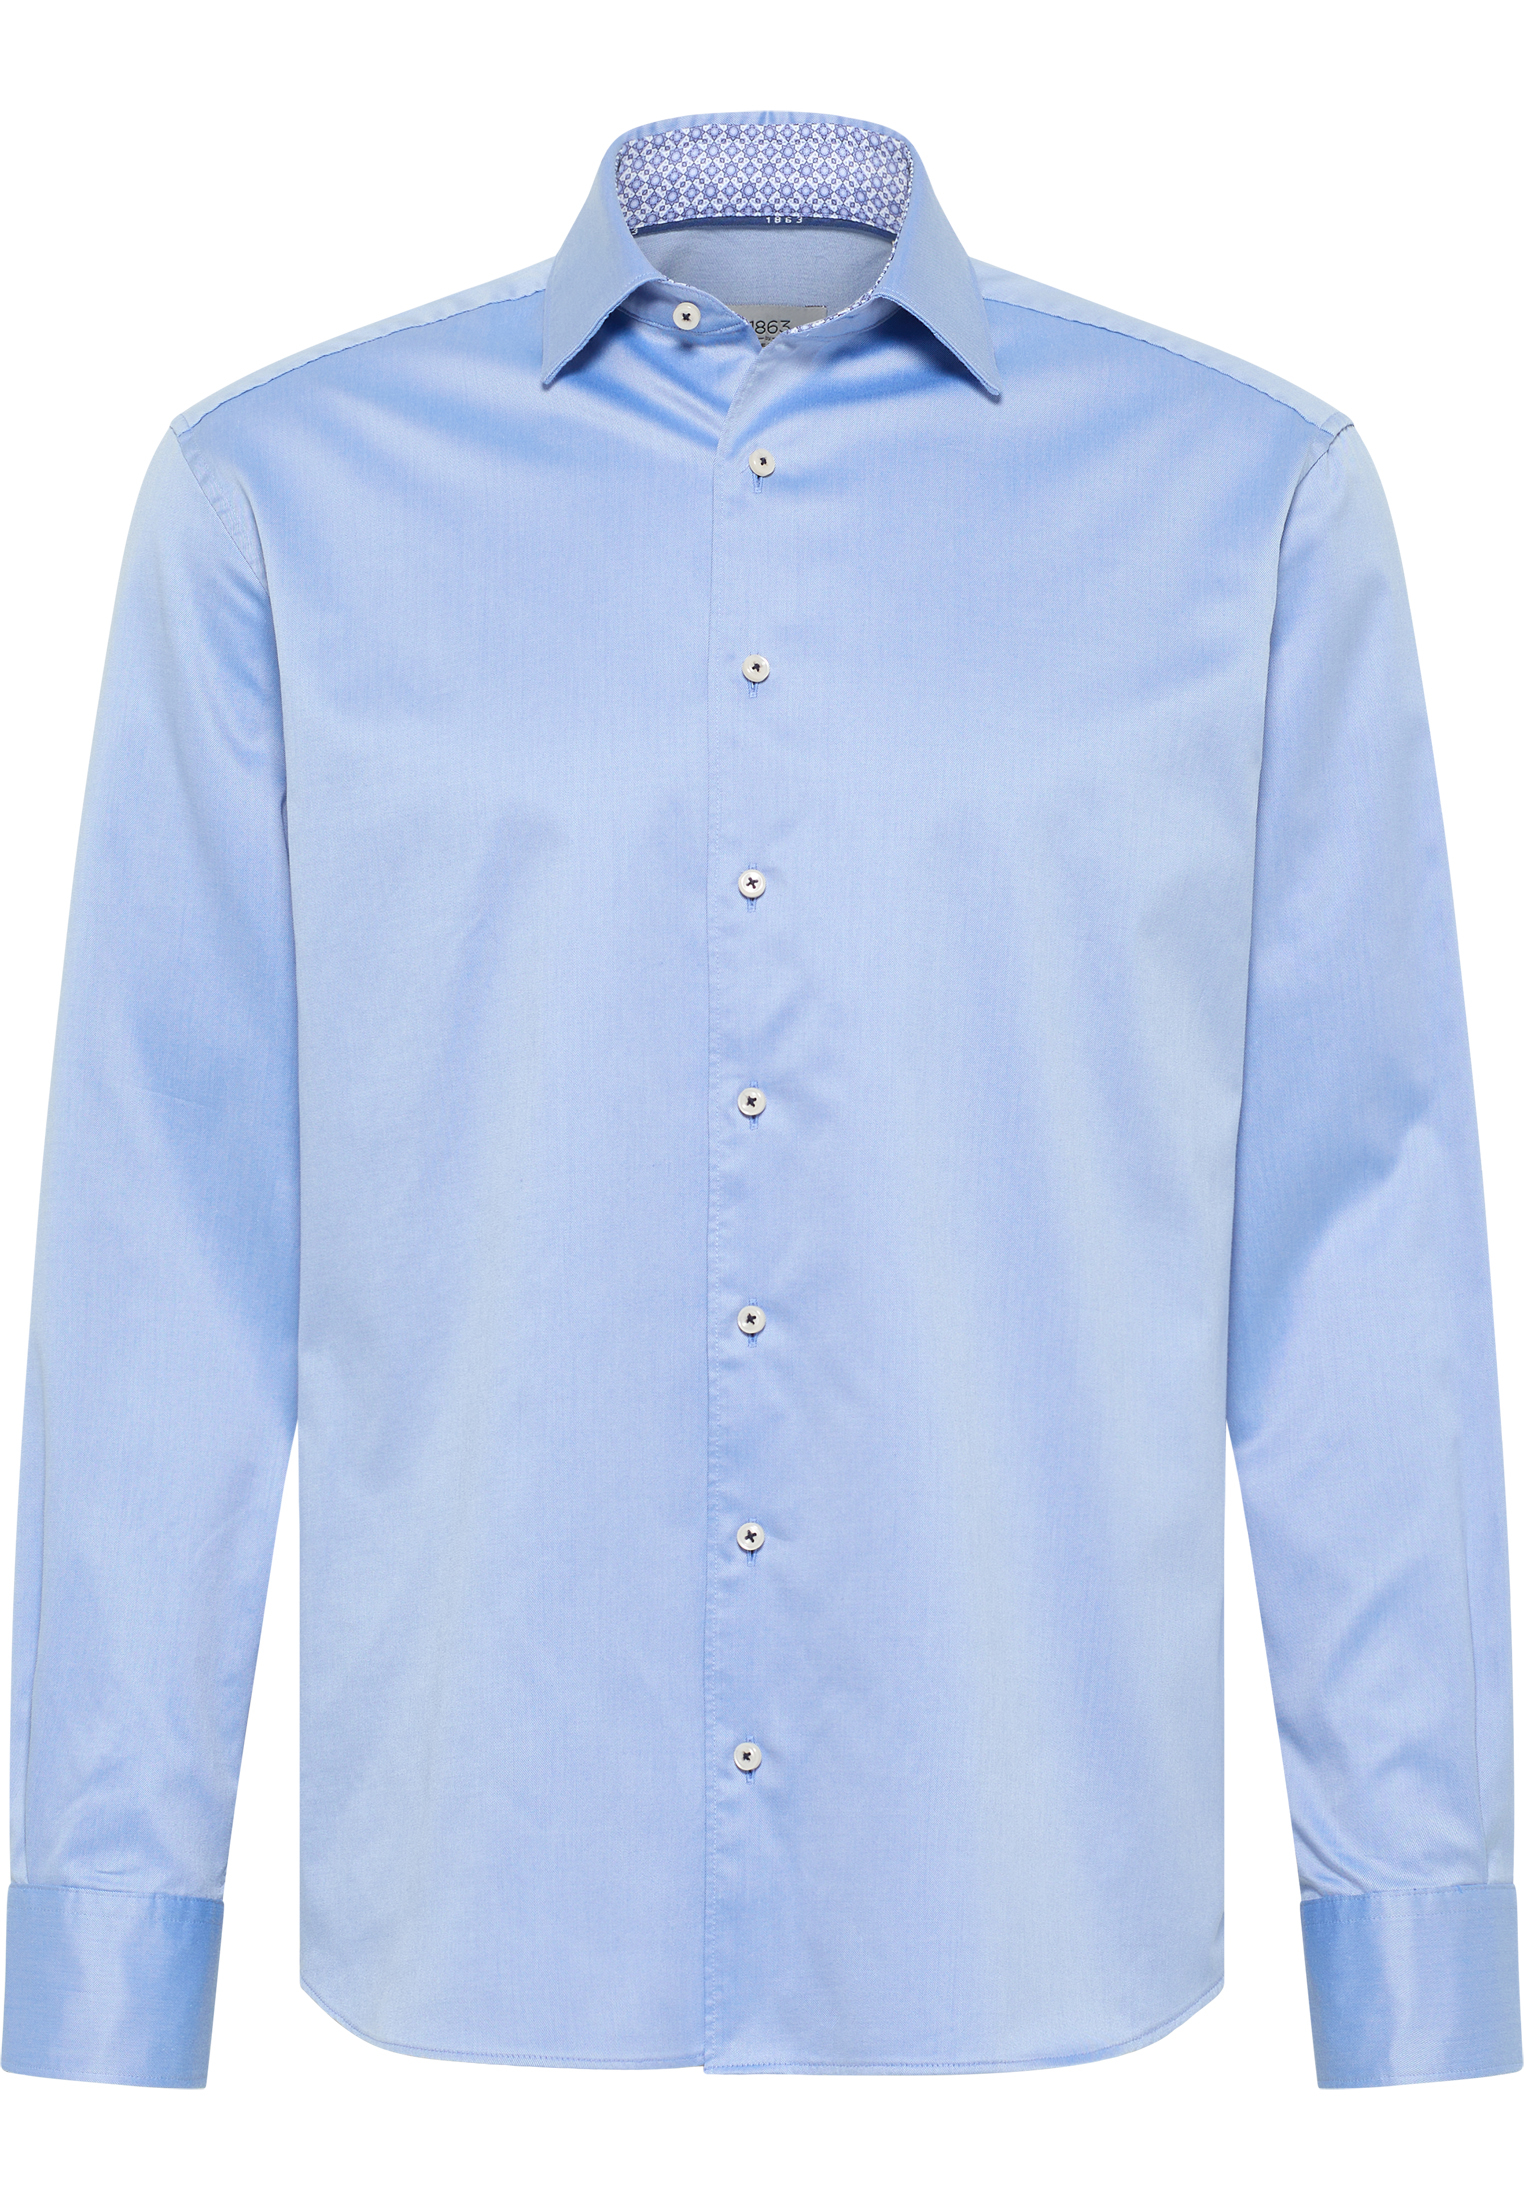 COMFORT FIT Soft Luxury Shirt bleu moyen uni